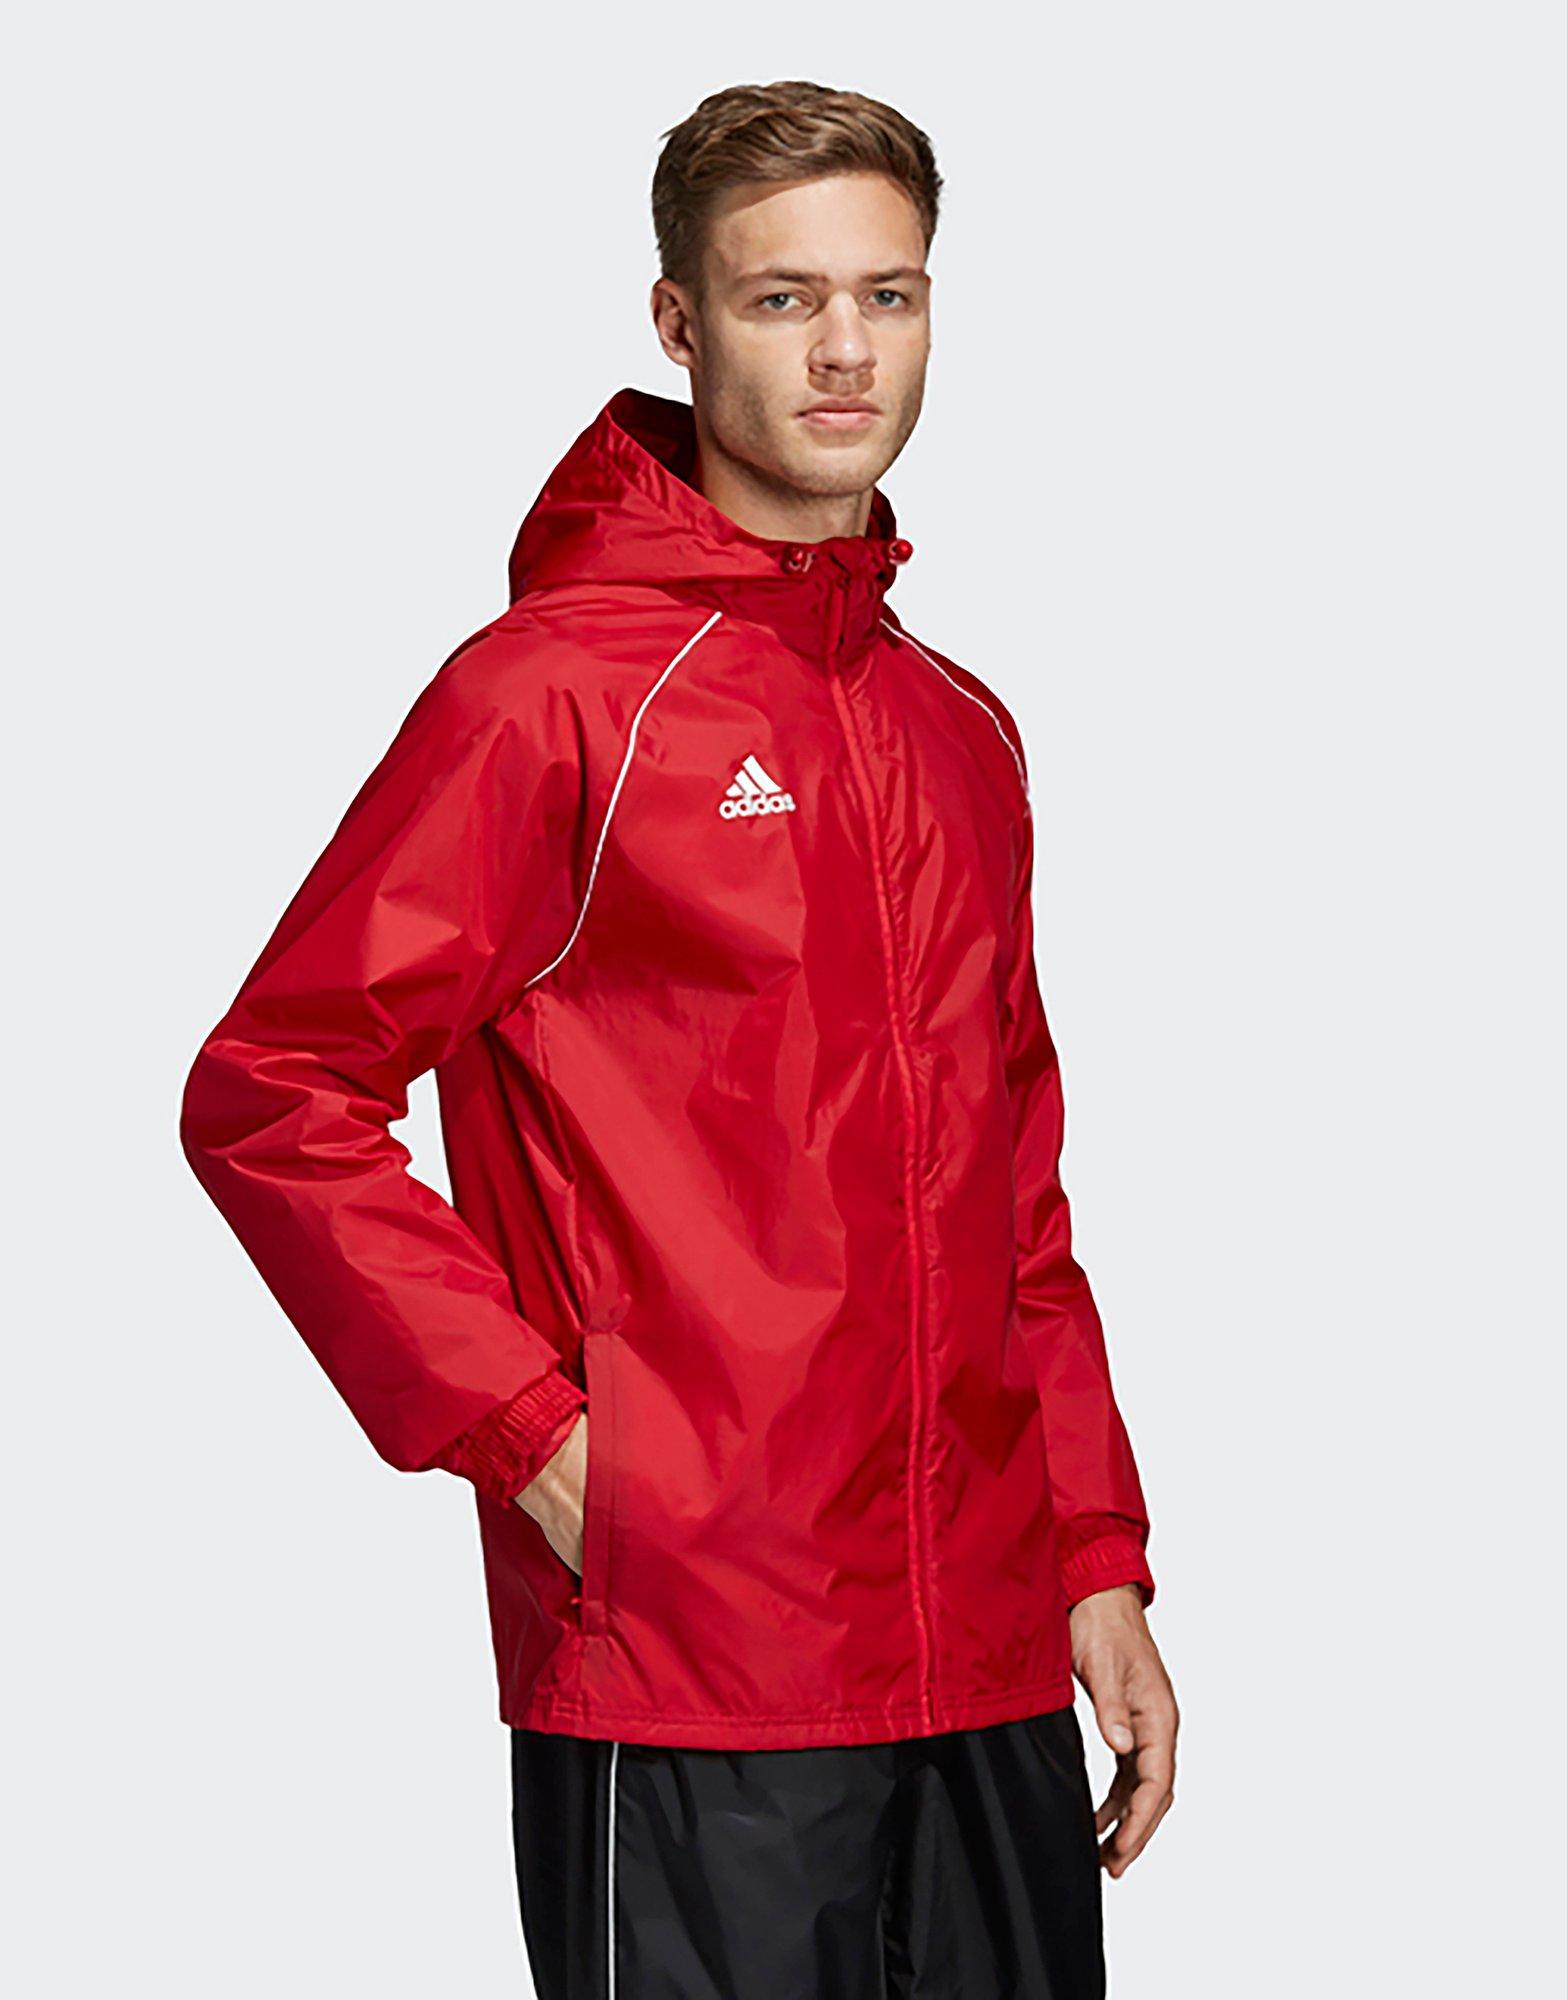 adidas core 18 rain jacket review